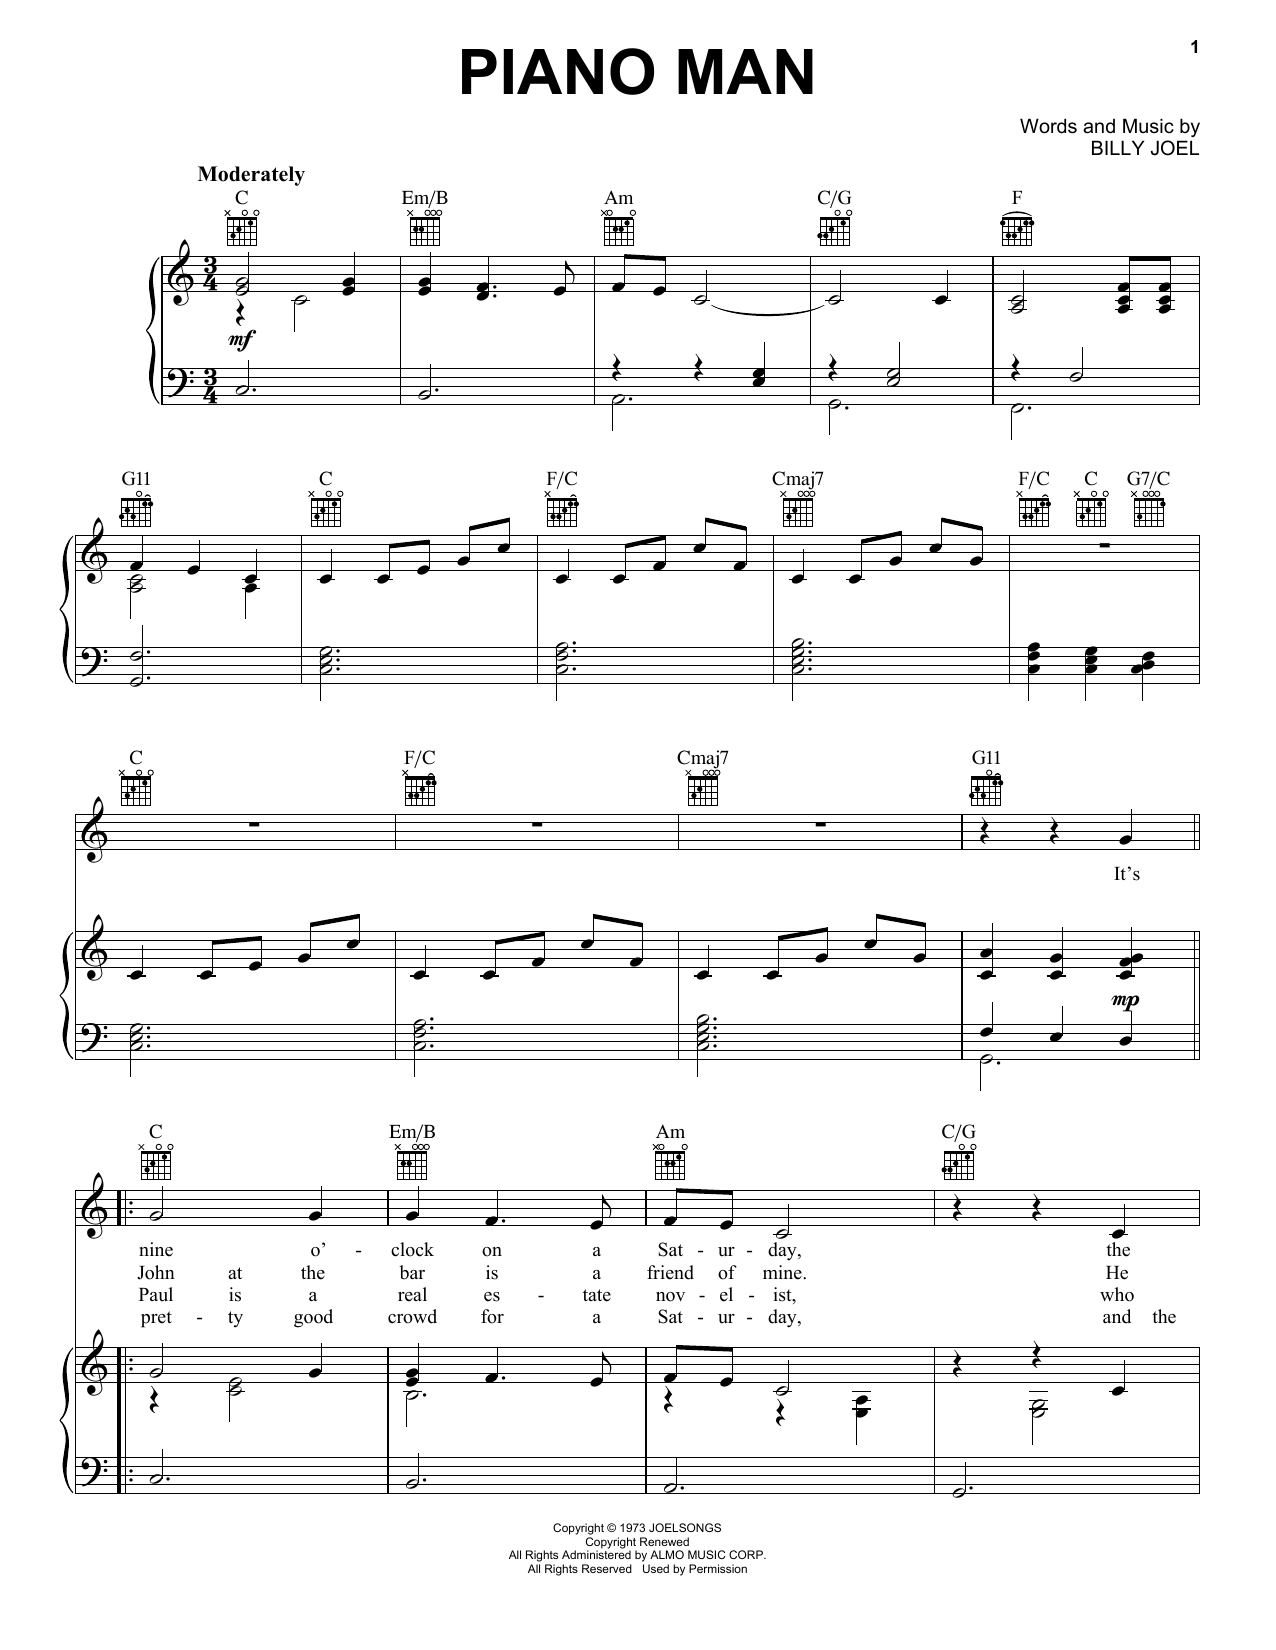 Billy Joel Piano Man Sheet Music Notes & Chords for Violin - Download or Print PDF